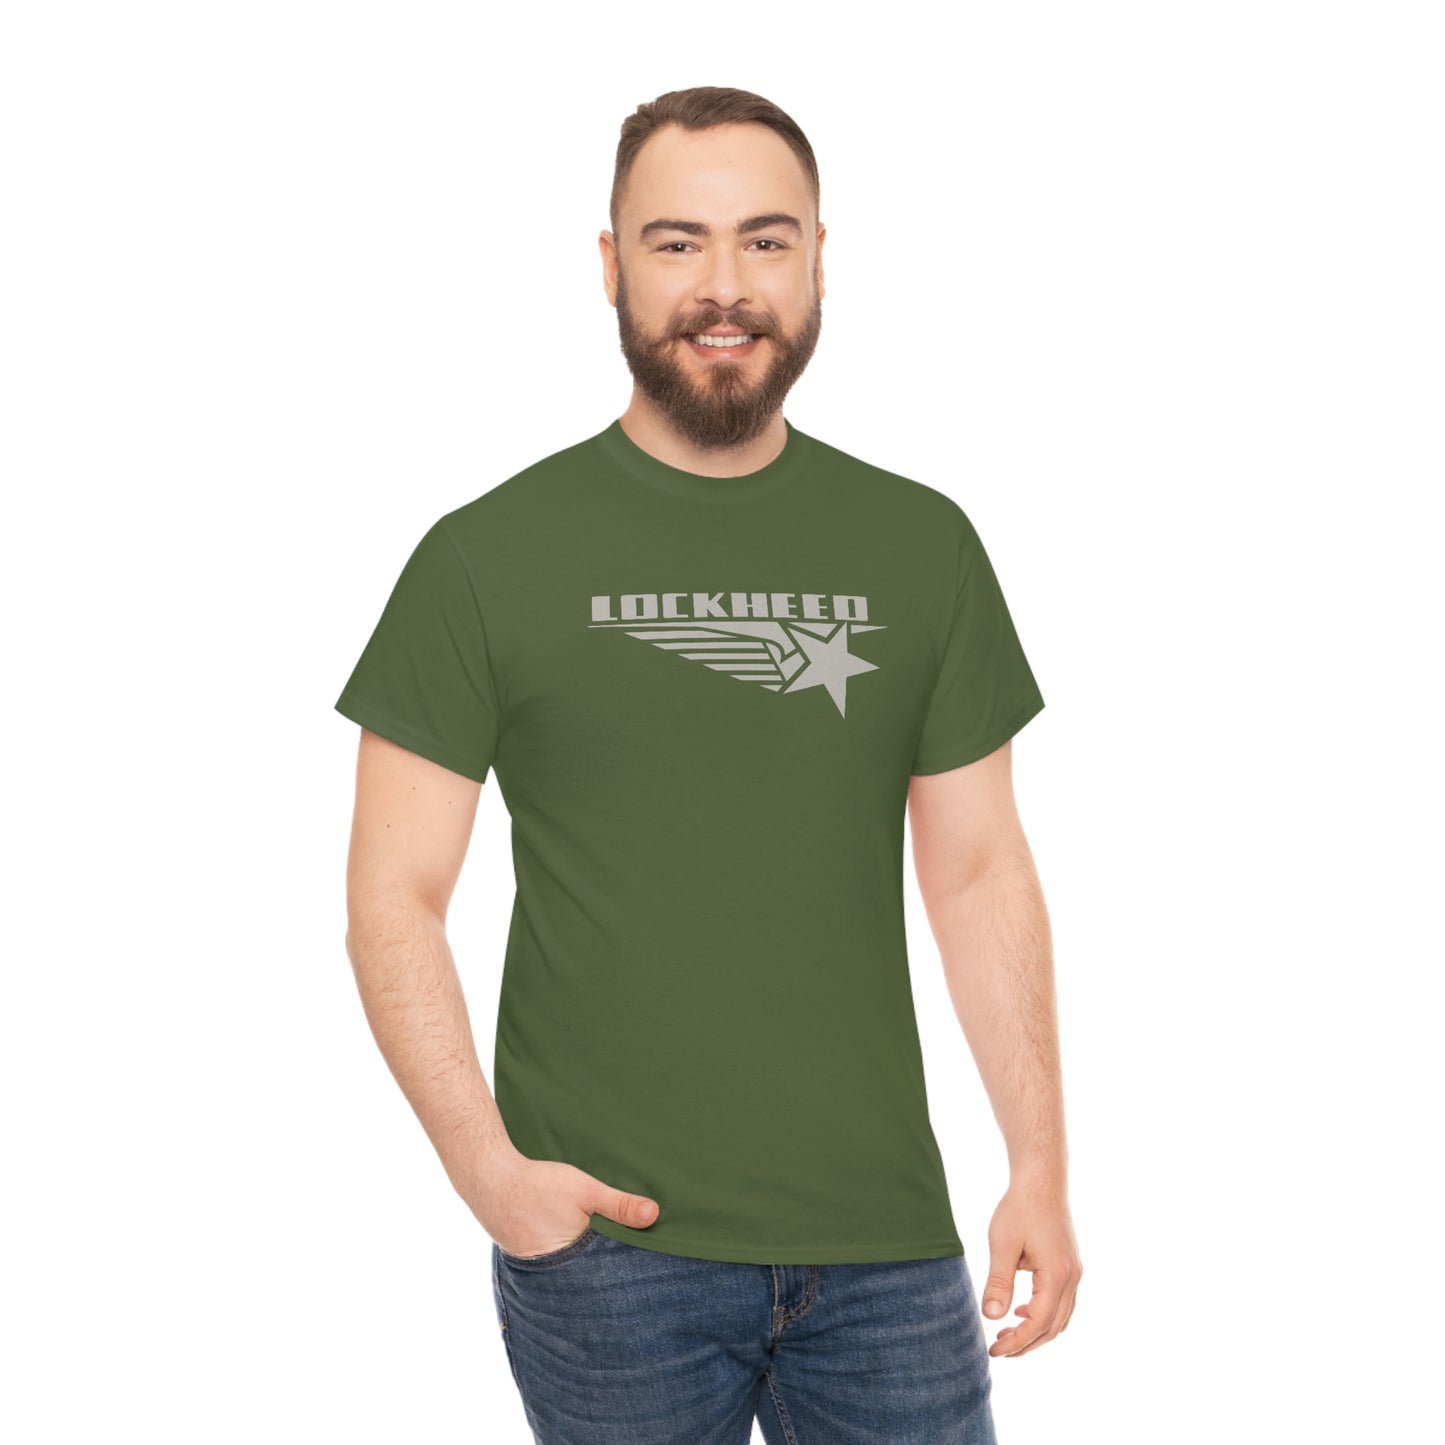 Lockheed T-Shirt